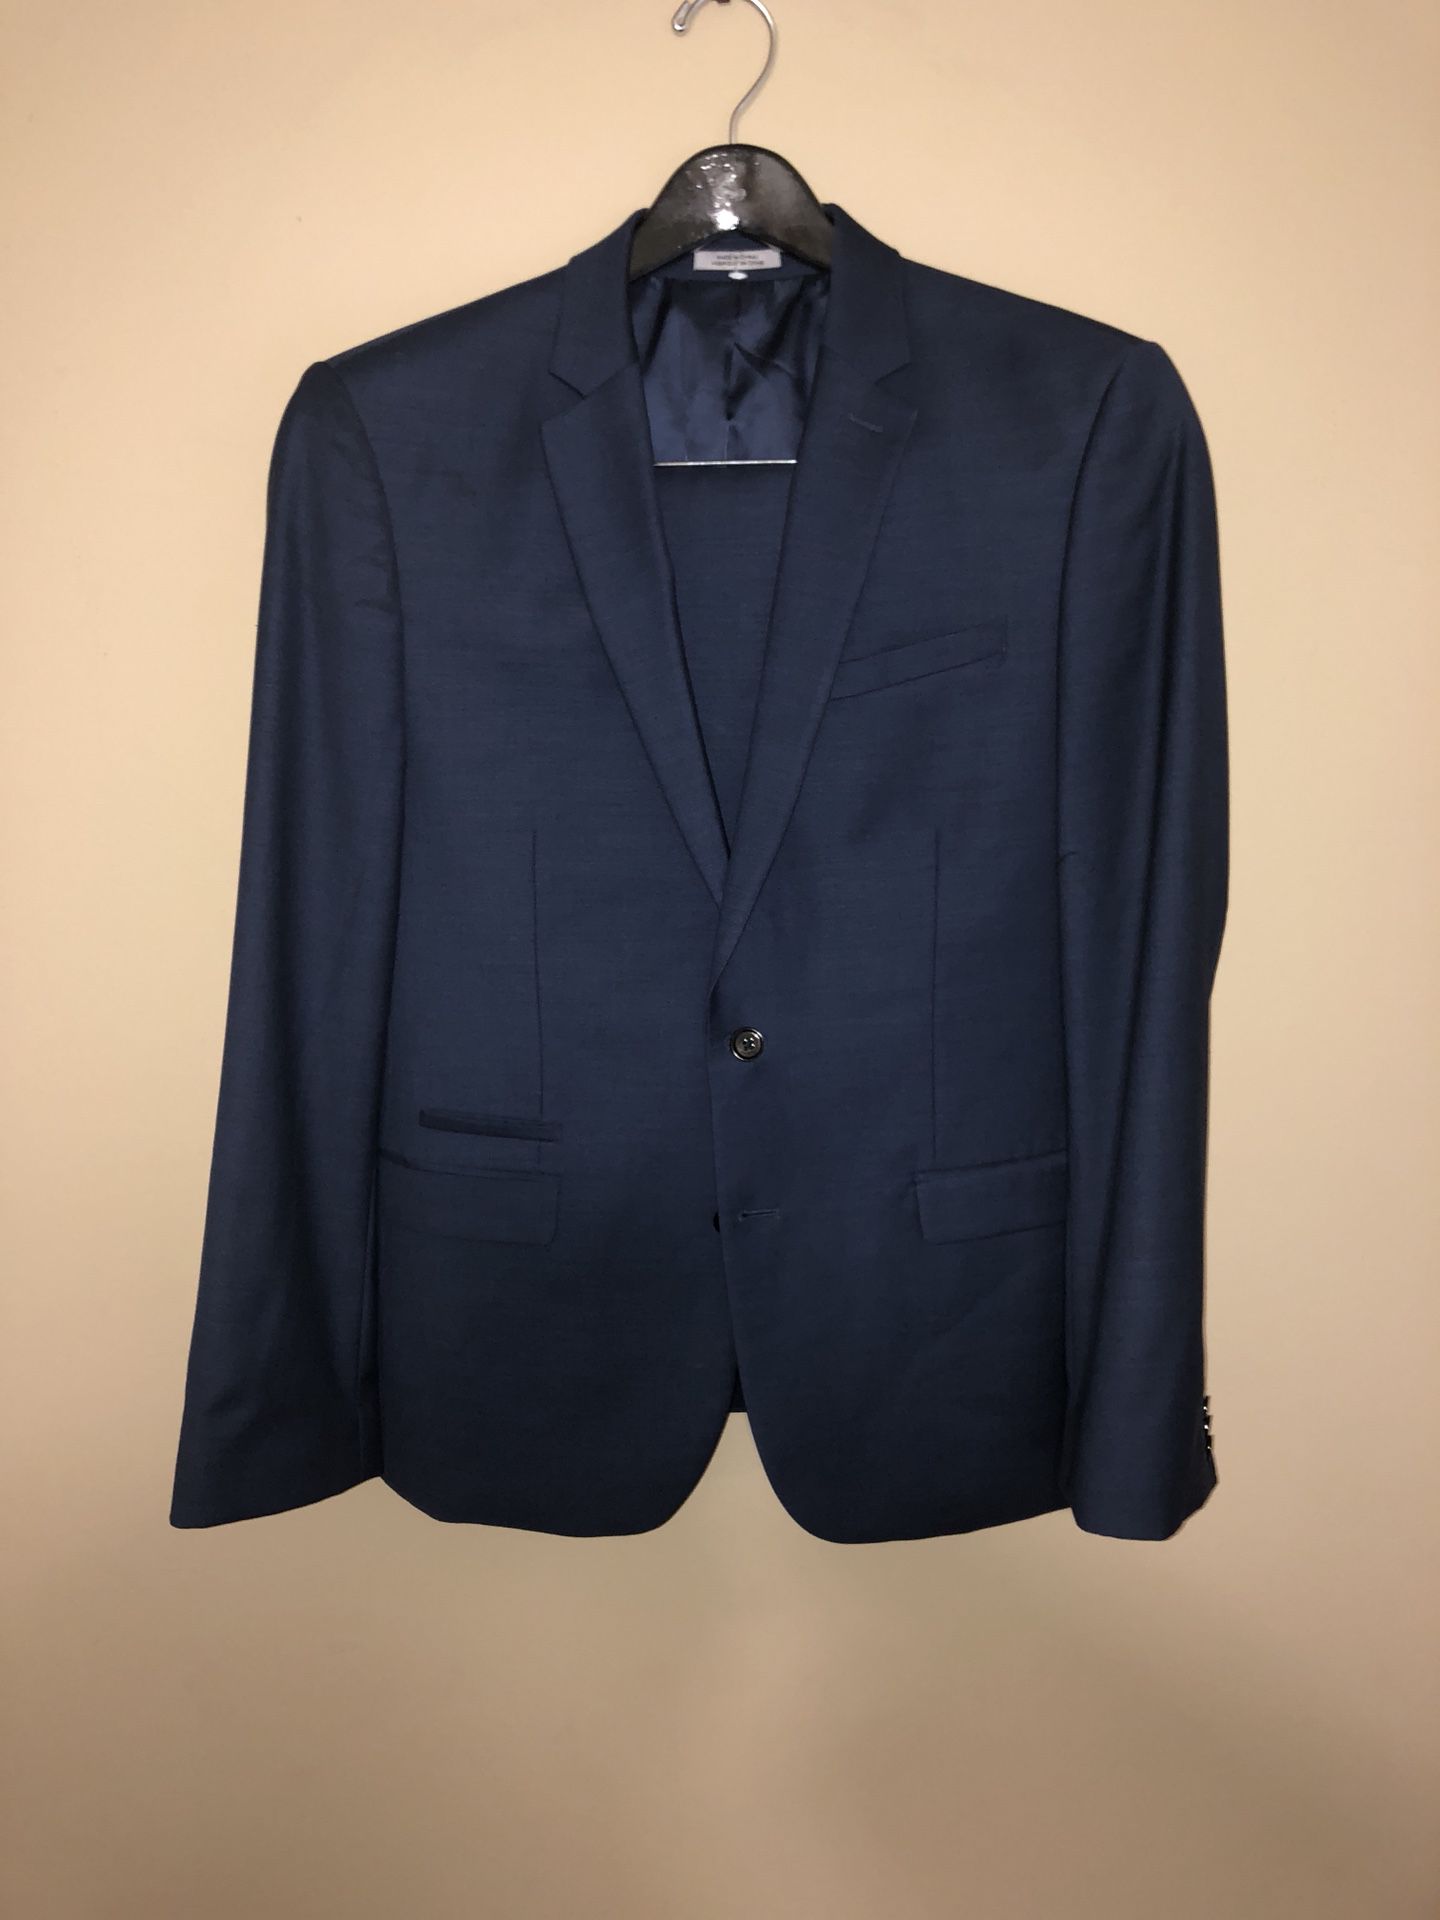 Navy Blue Express Fitted suit Blazer 40 Regular Pants 33/30